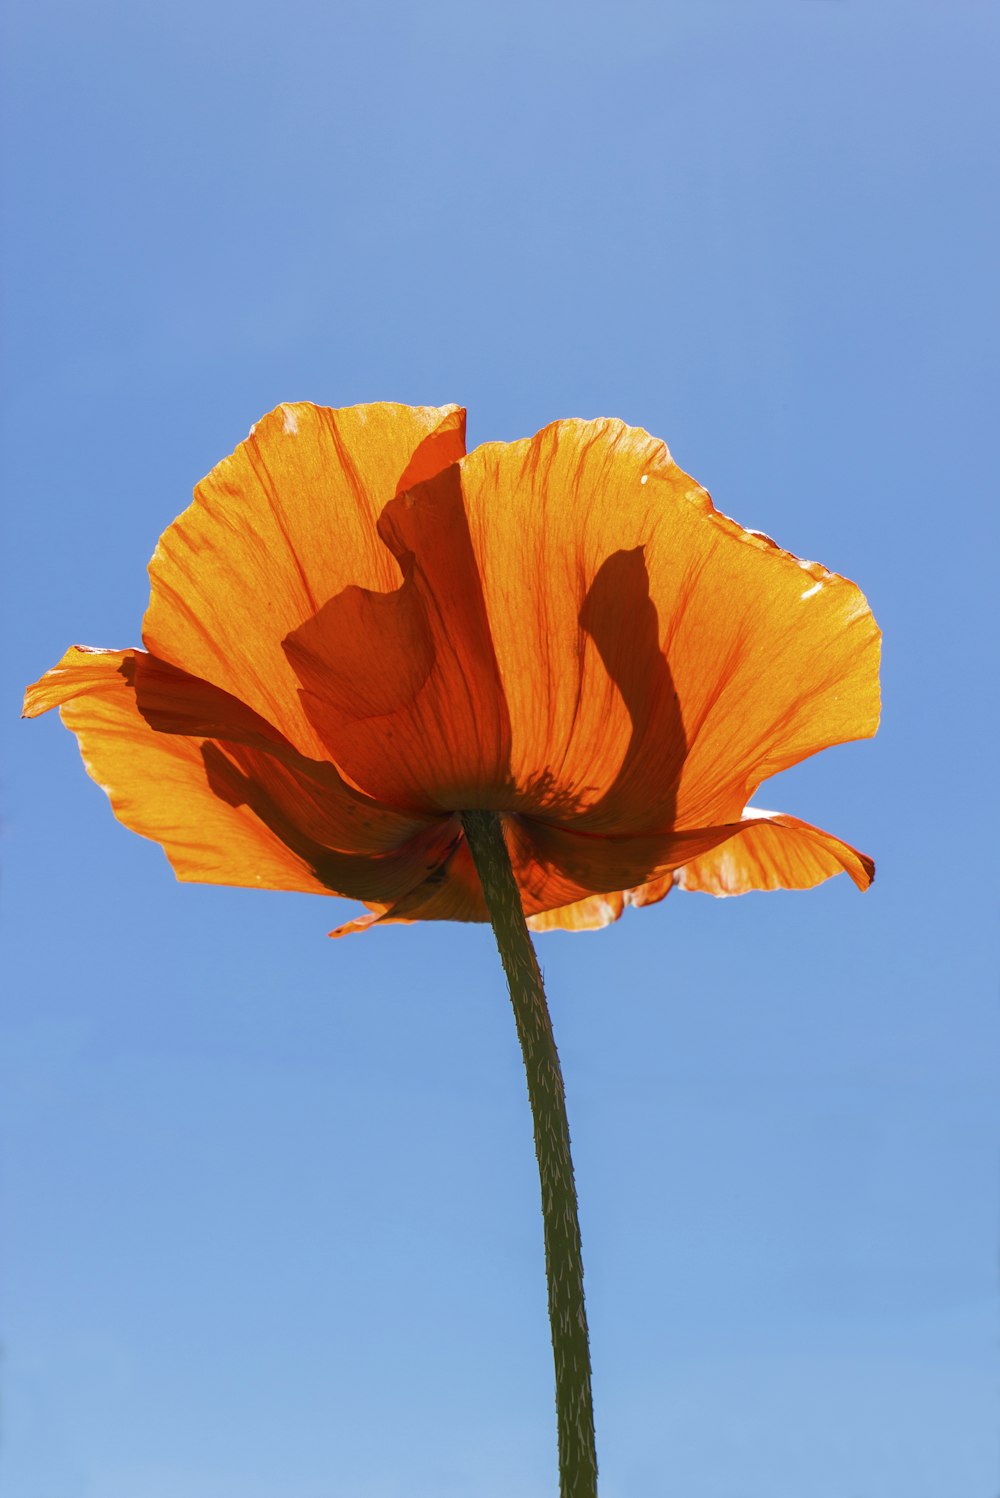 orange flower under blue sky during daytime